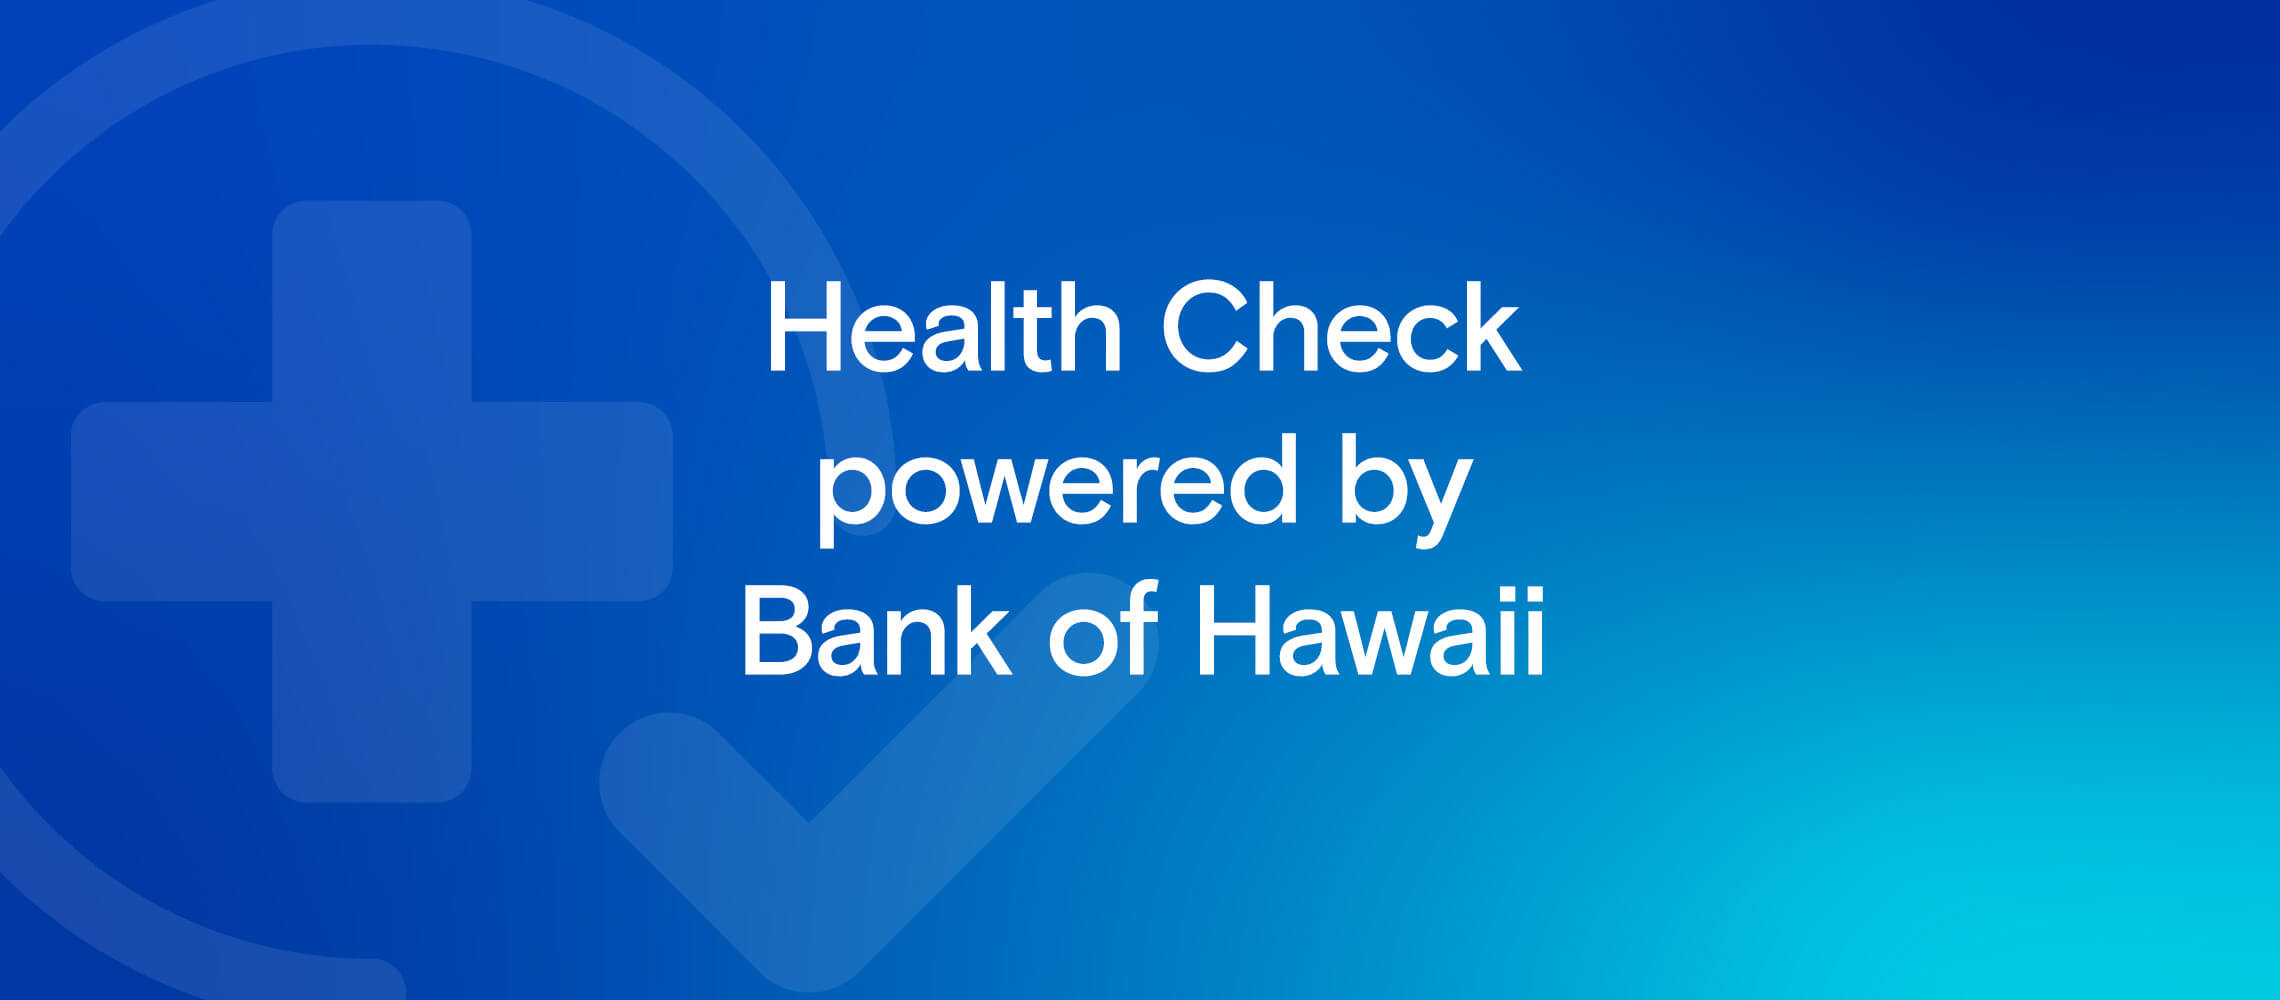 download windows 11 pc health check app